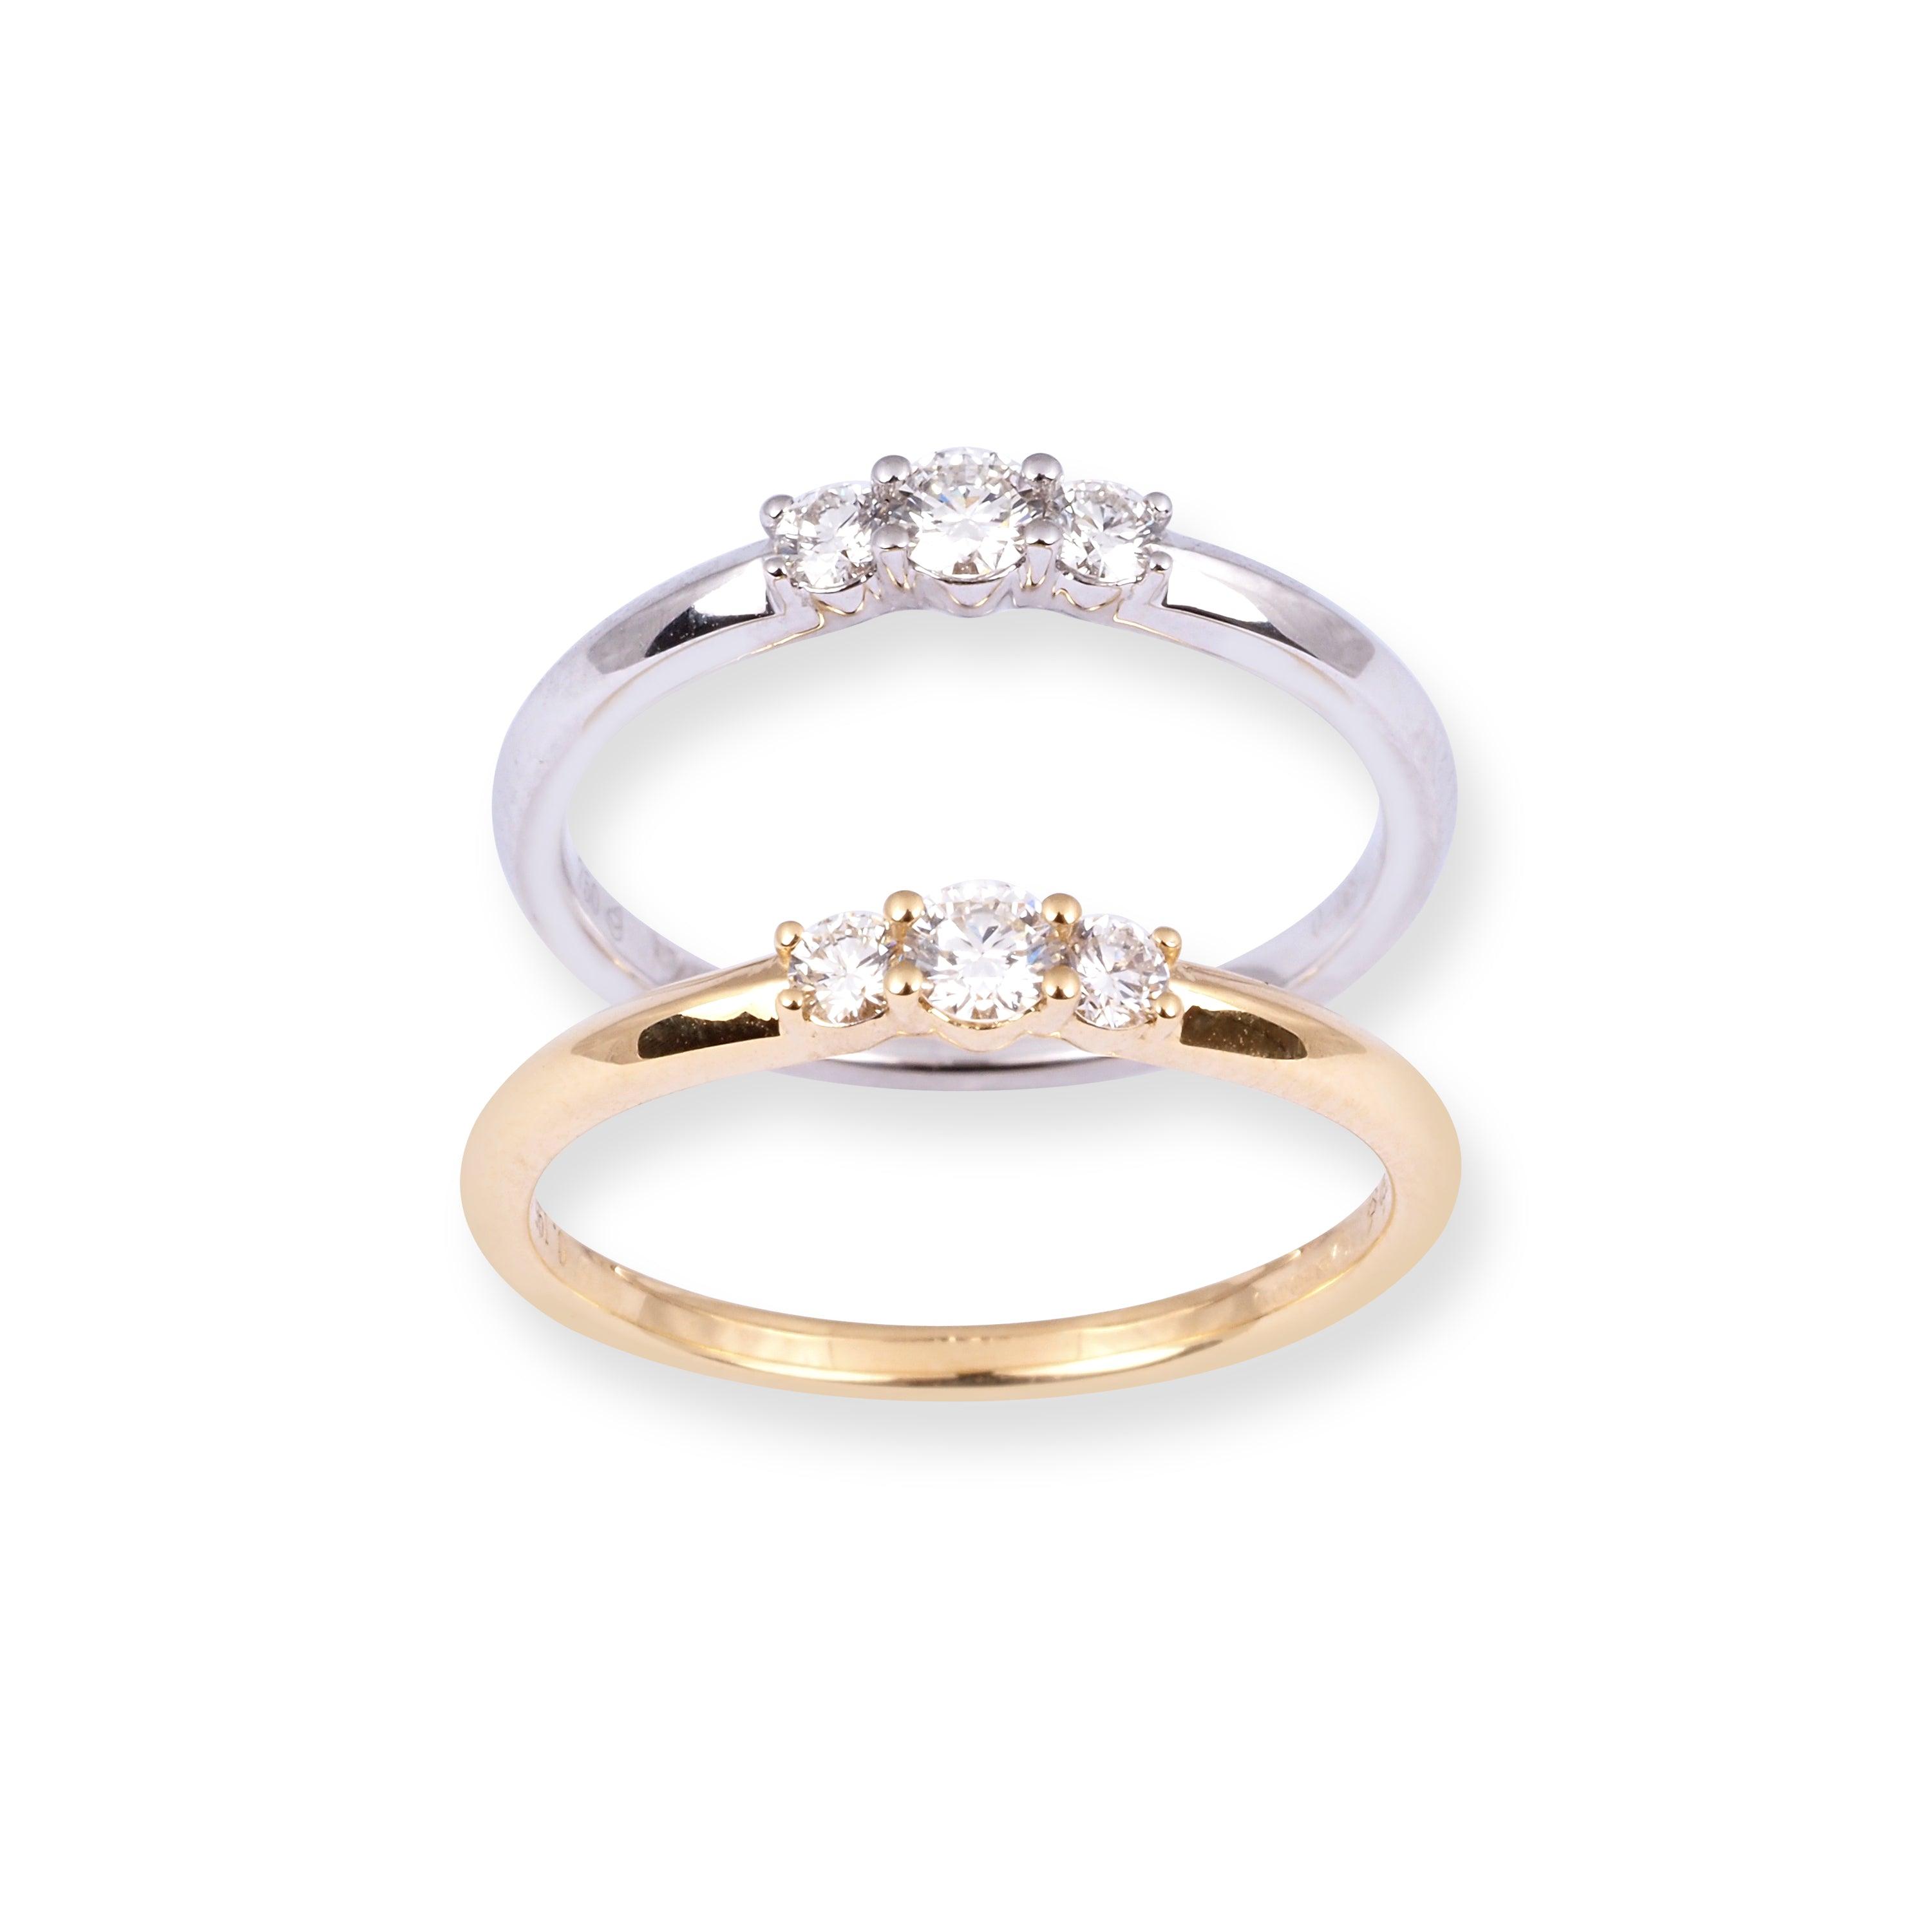 18ct White/Yellow Gold Trilogy Diamond Ring LR-7022 - Minar Jewellers